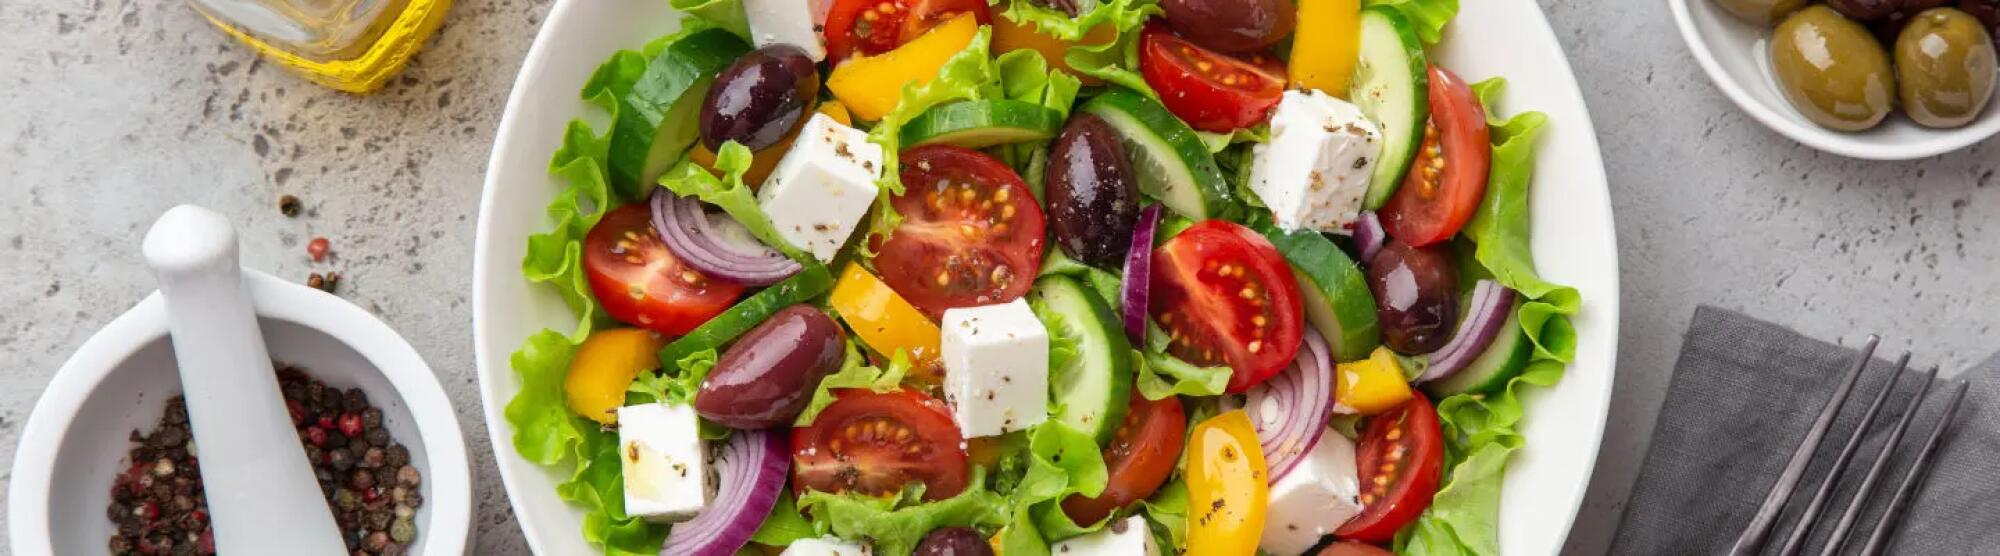 Recette : Salade grecque au fromage de brebis